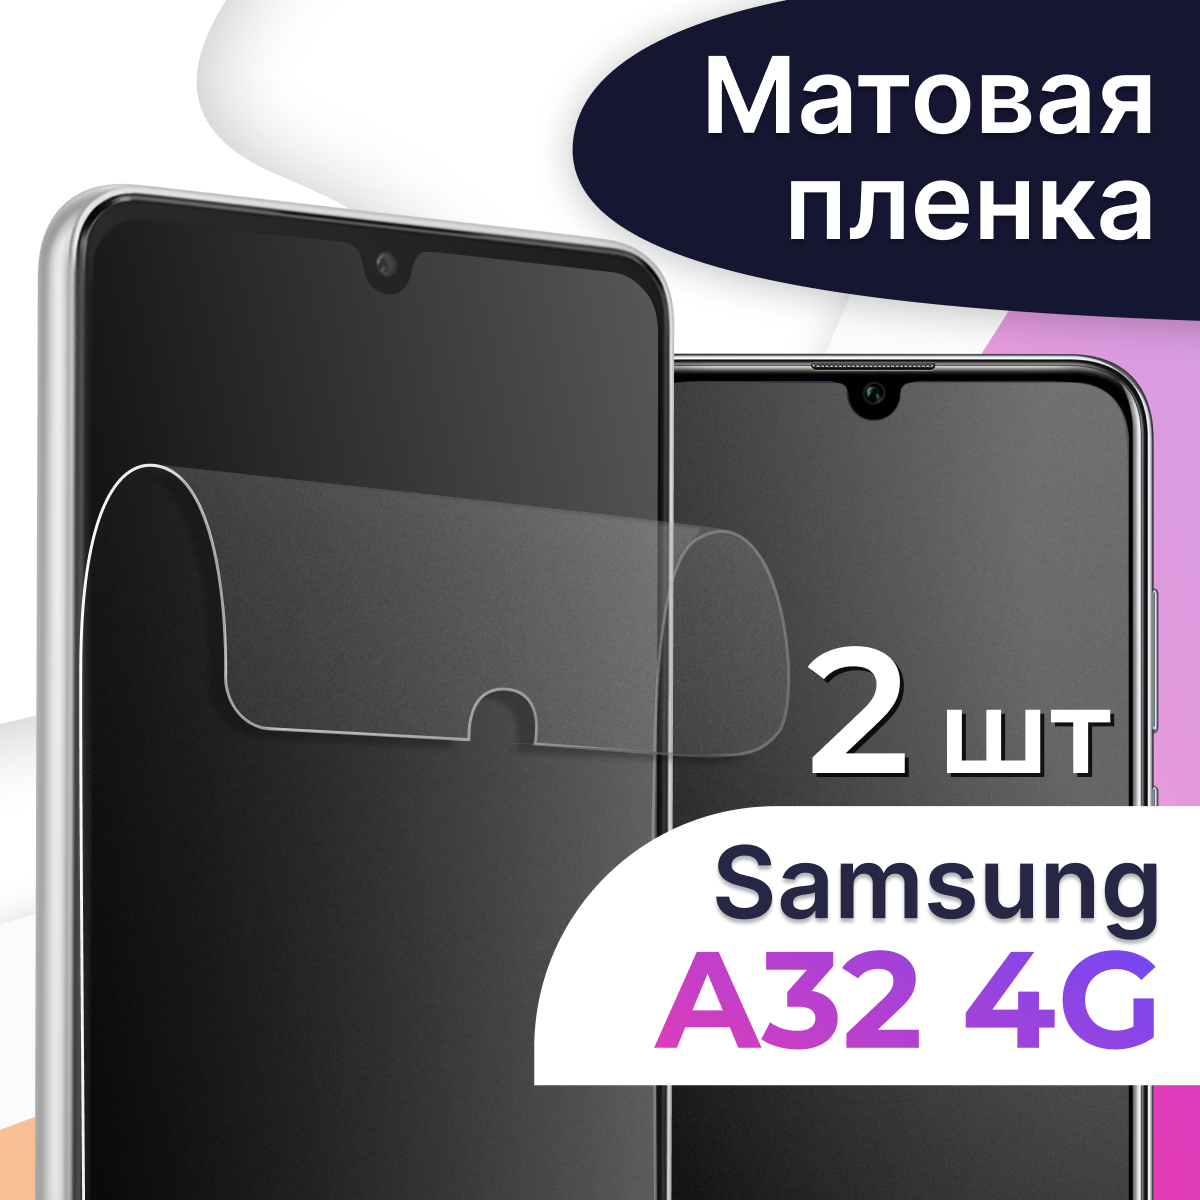 Матовая пленка на телефон Samsung Galaxy A32 4G / Гидрогелевая противоударная пленка для смартфона Самсунг Галакси А32 4Г/ Защитная пленка